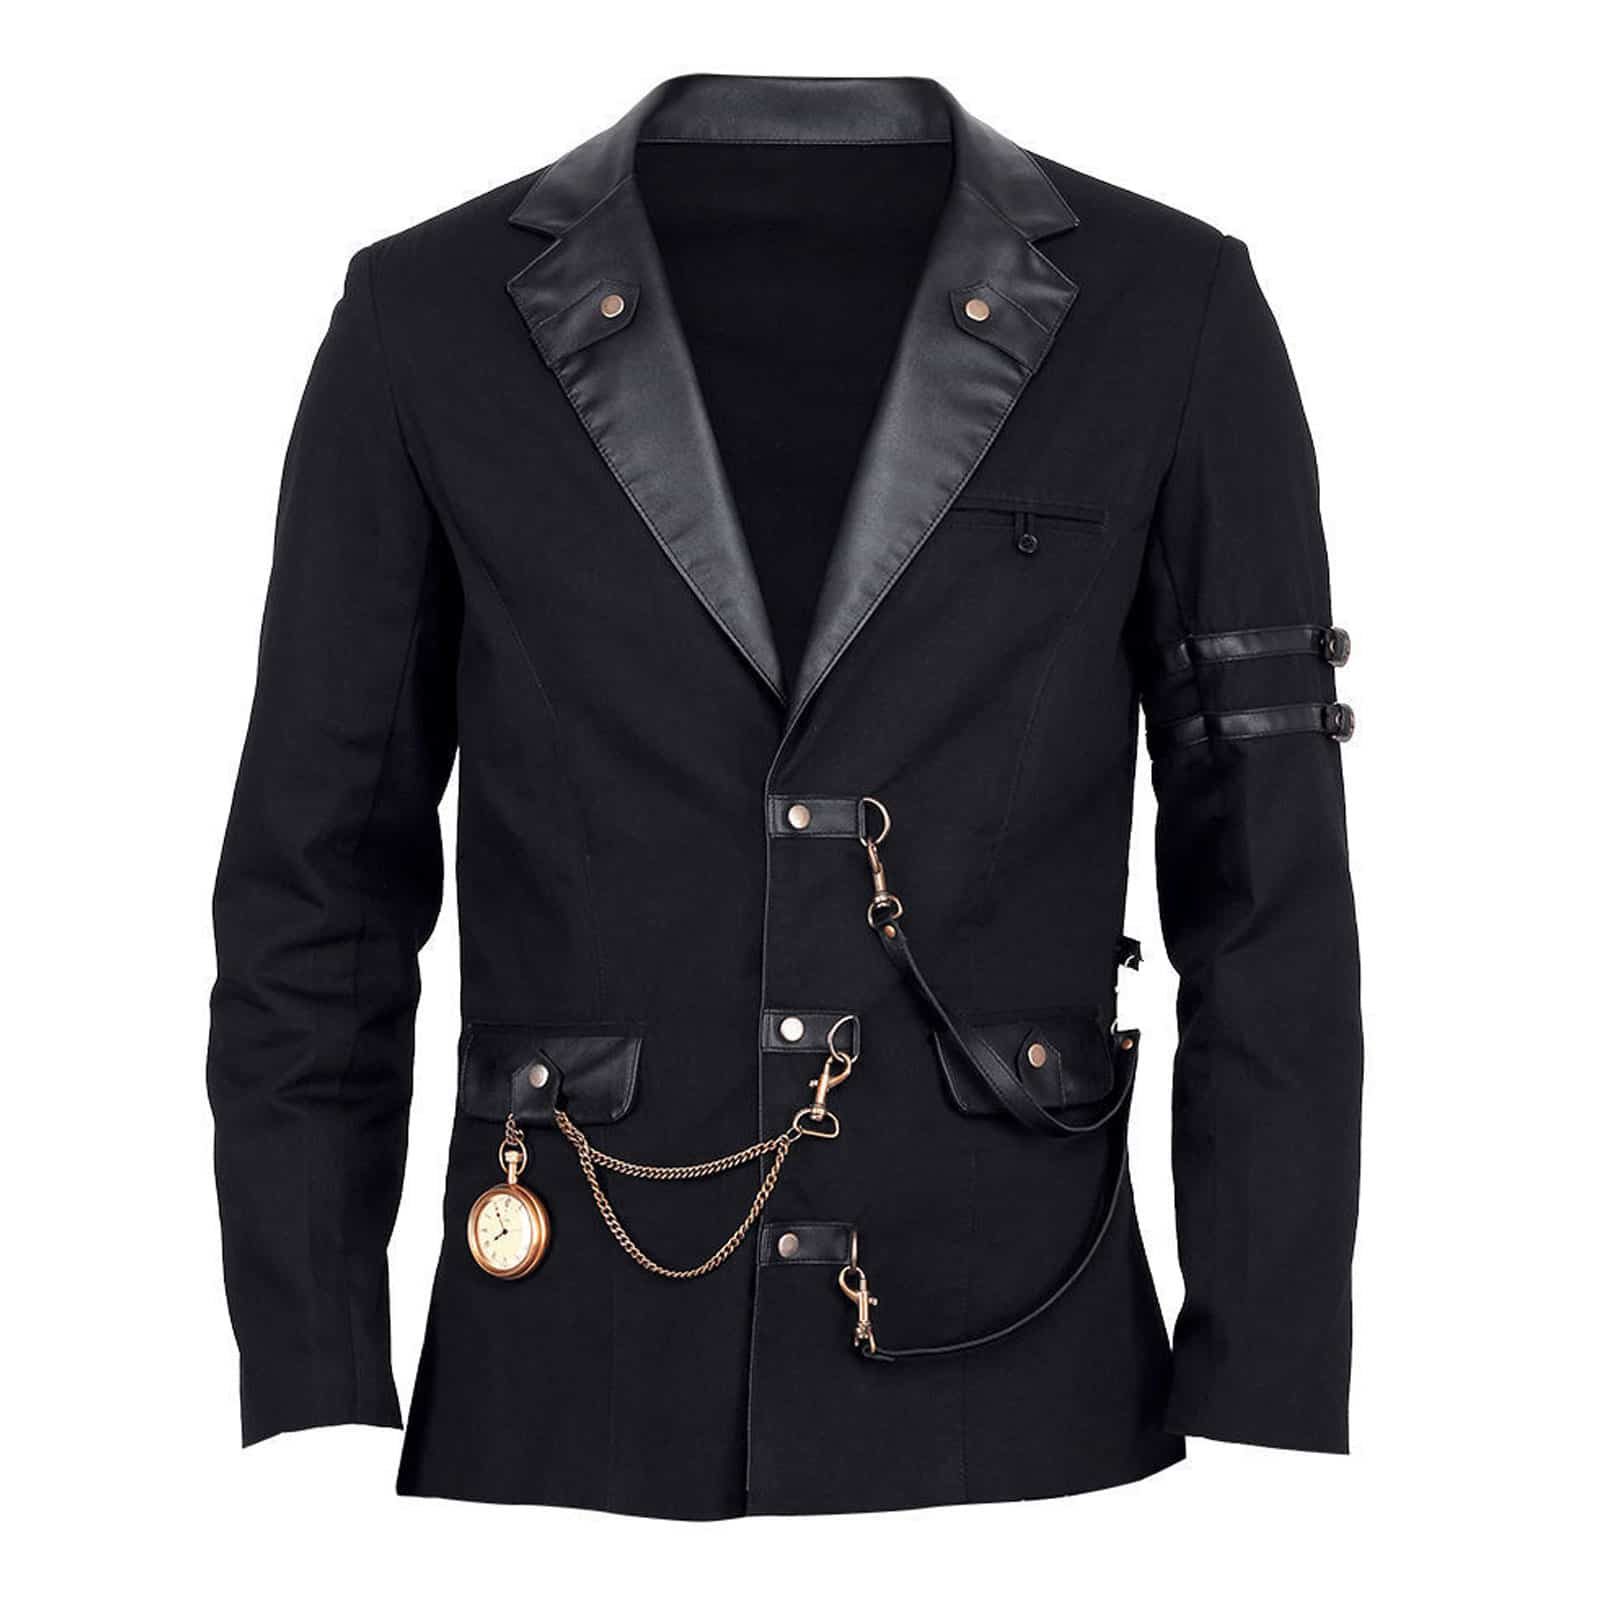 Veste noire gothique Jacke Herren schwarz, vestes vintage pour hommes, vestes gothiques pour homme